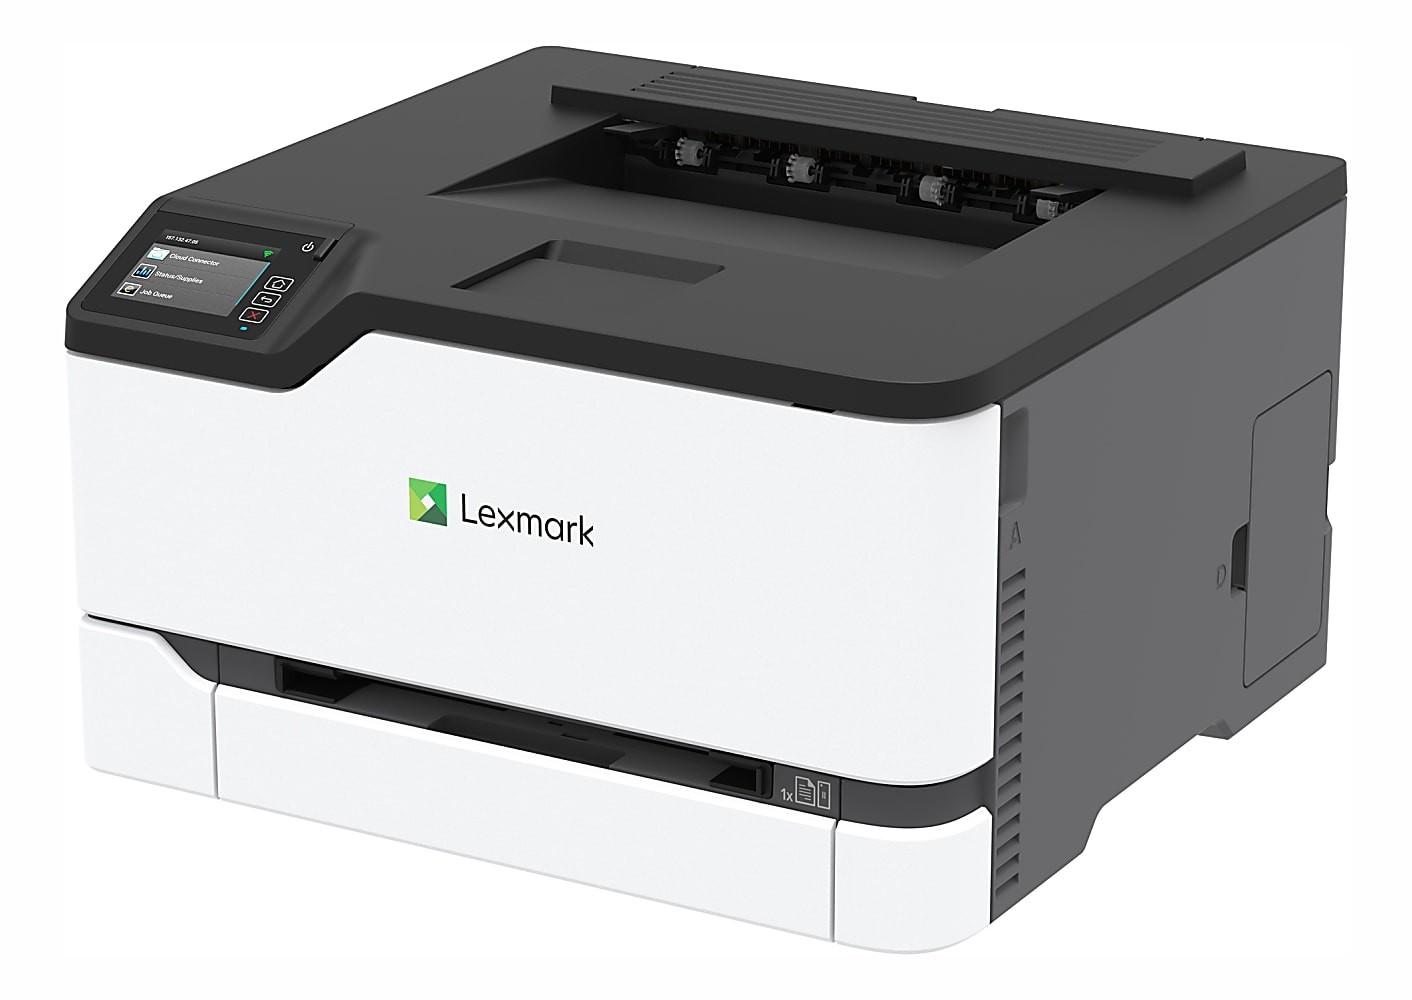 Lexmark CS431dw Wireless Laser Color Printer Deals Price History at JoinHoney.com | Honey